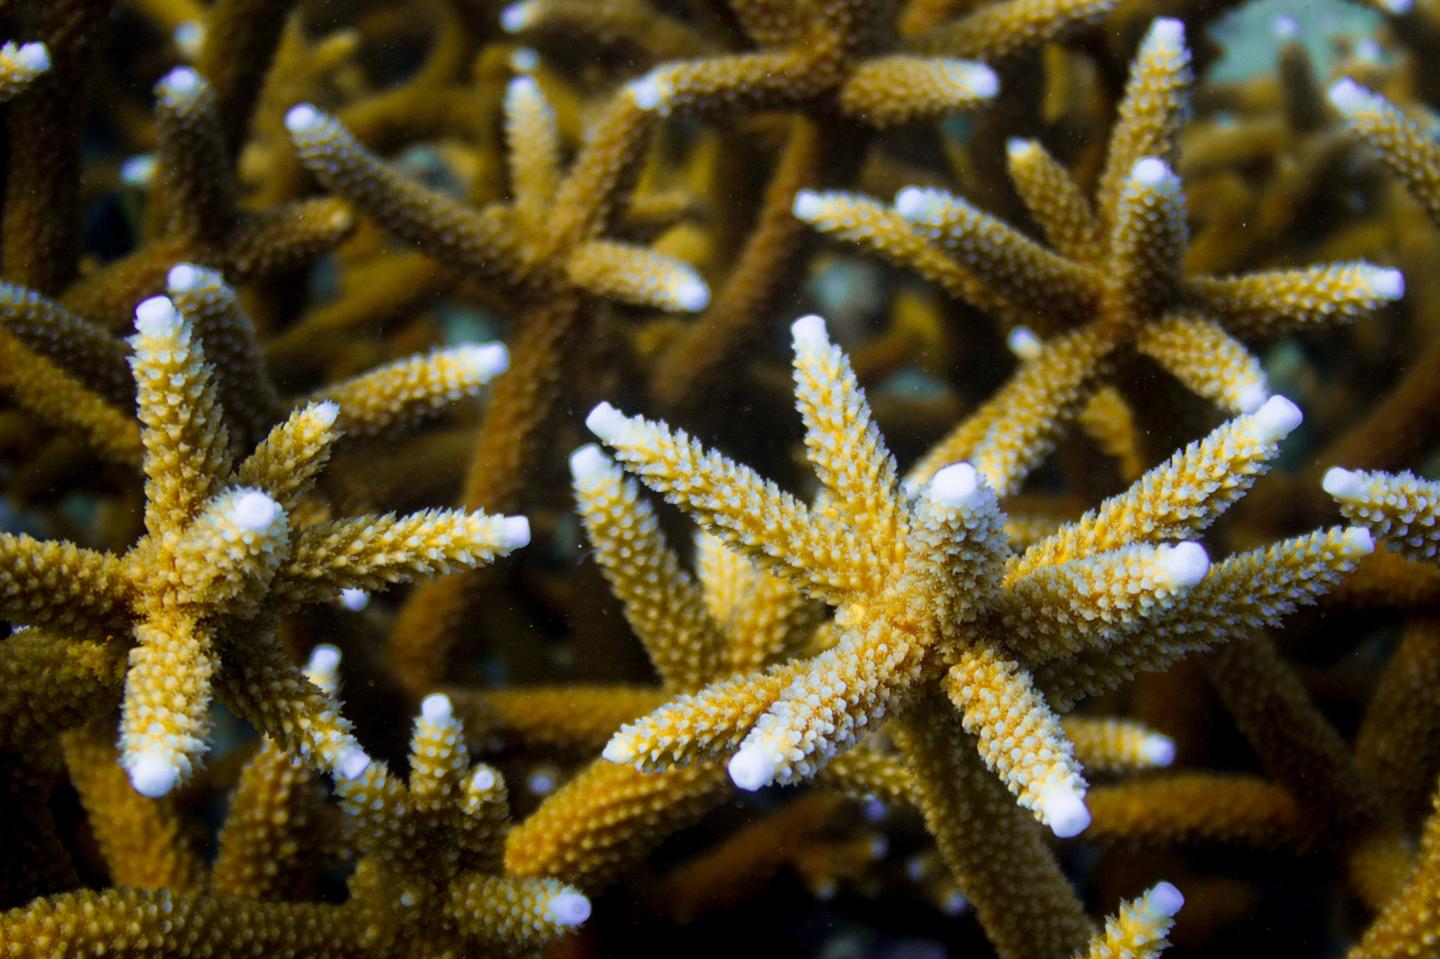 Florida corals may struggle to survive